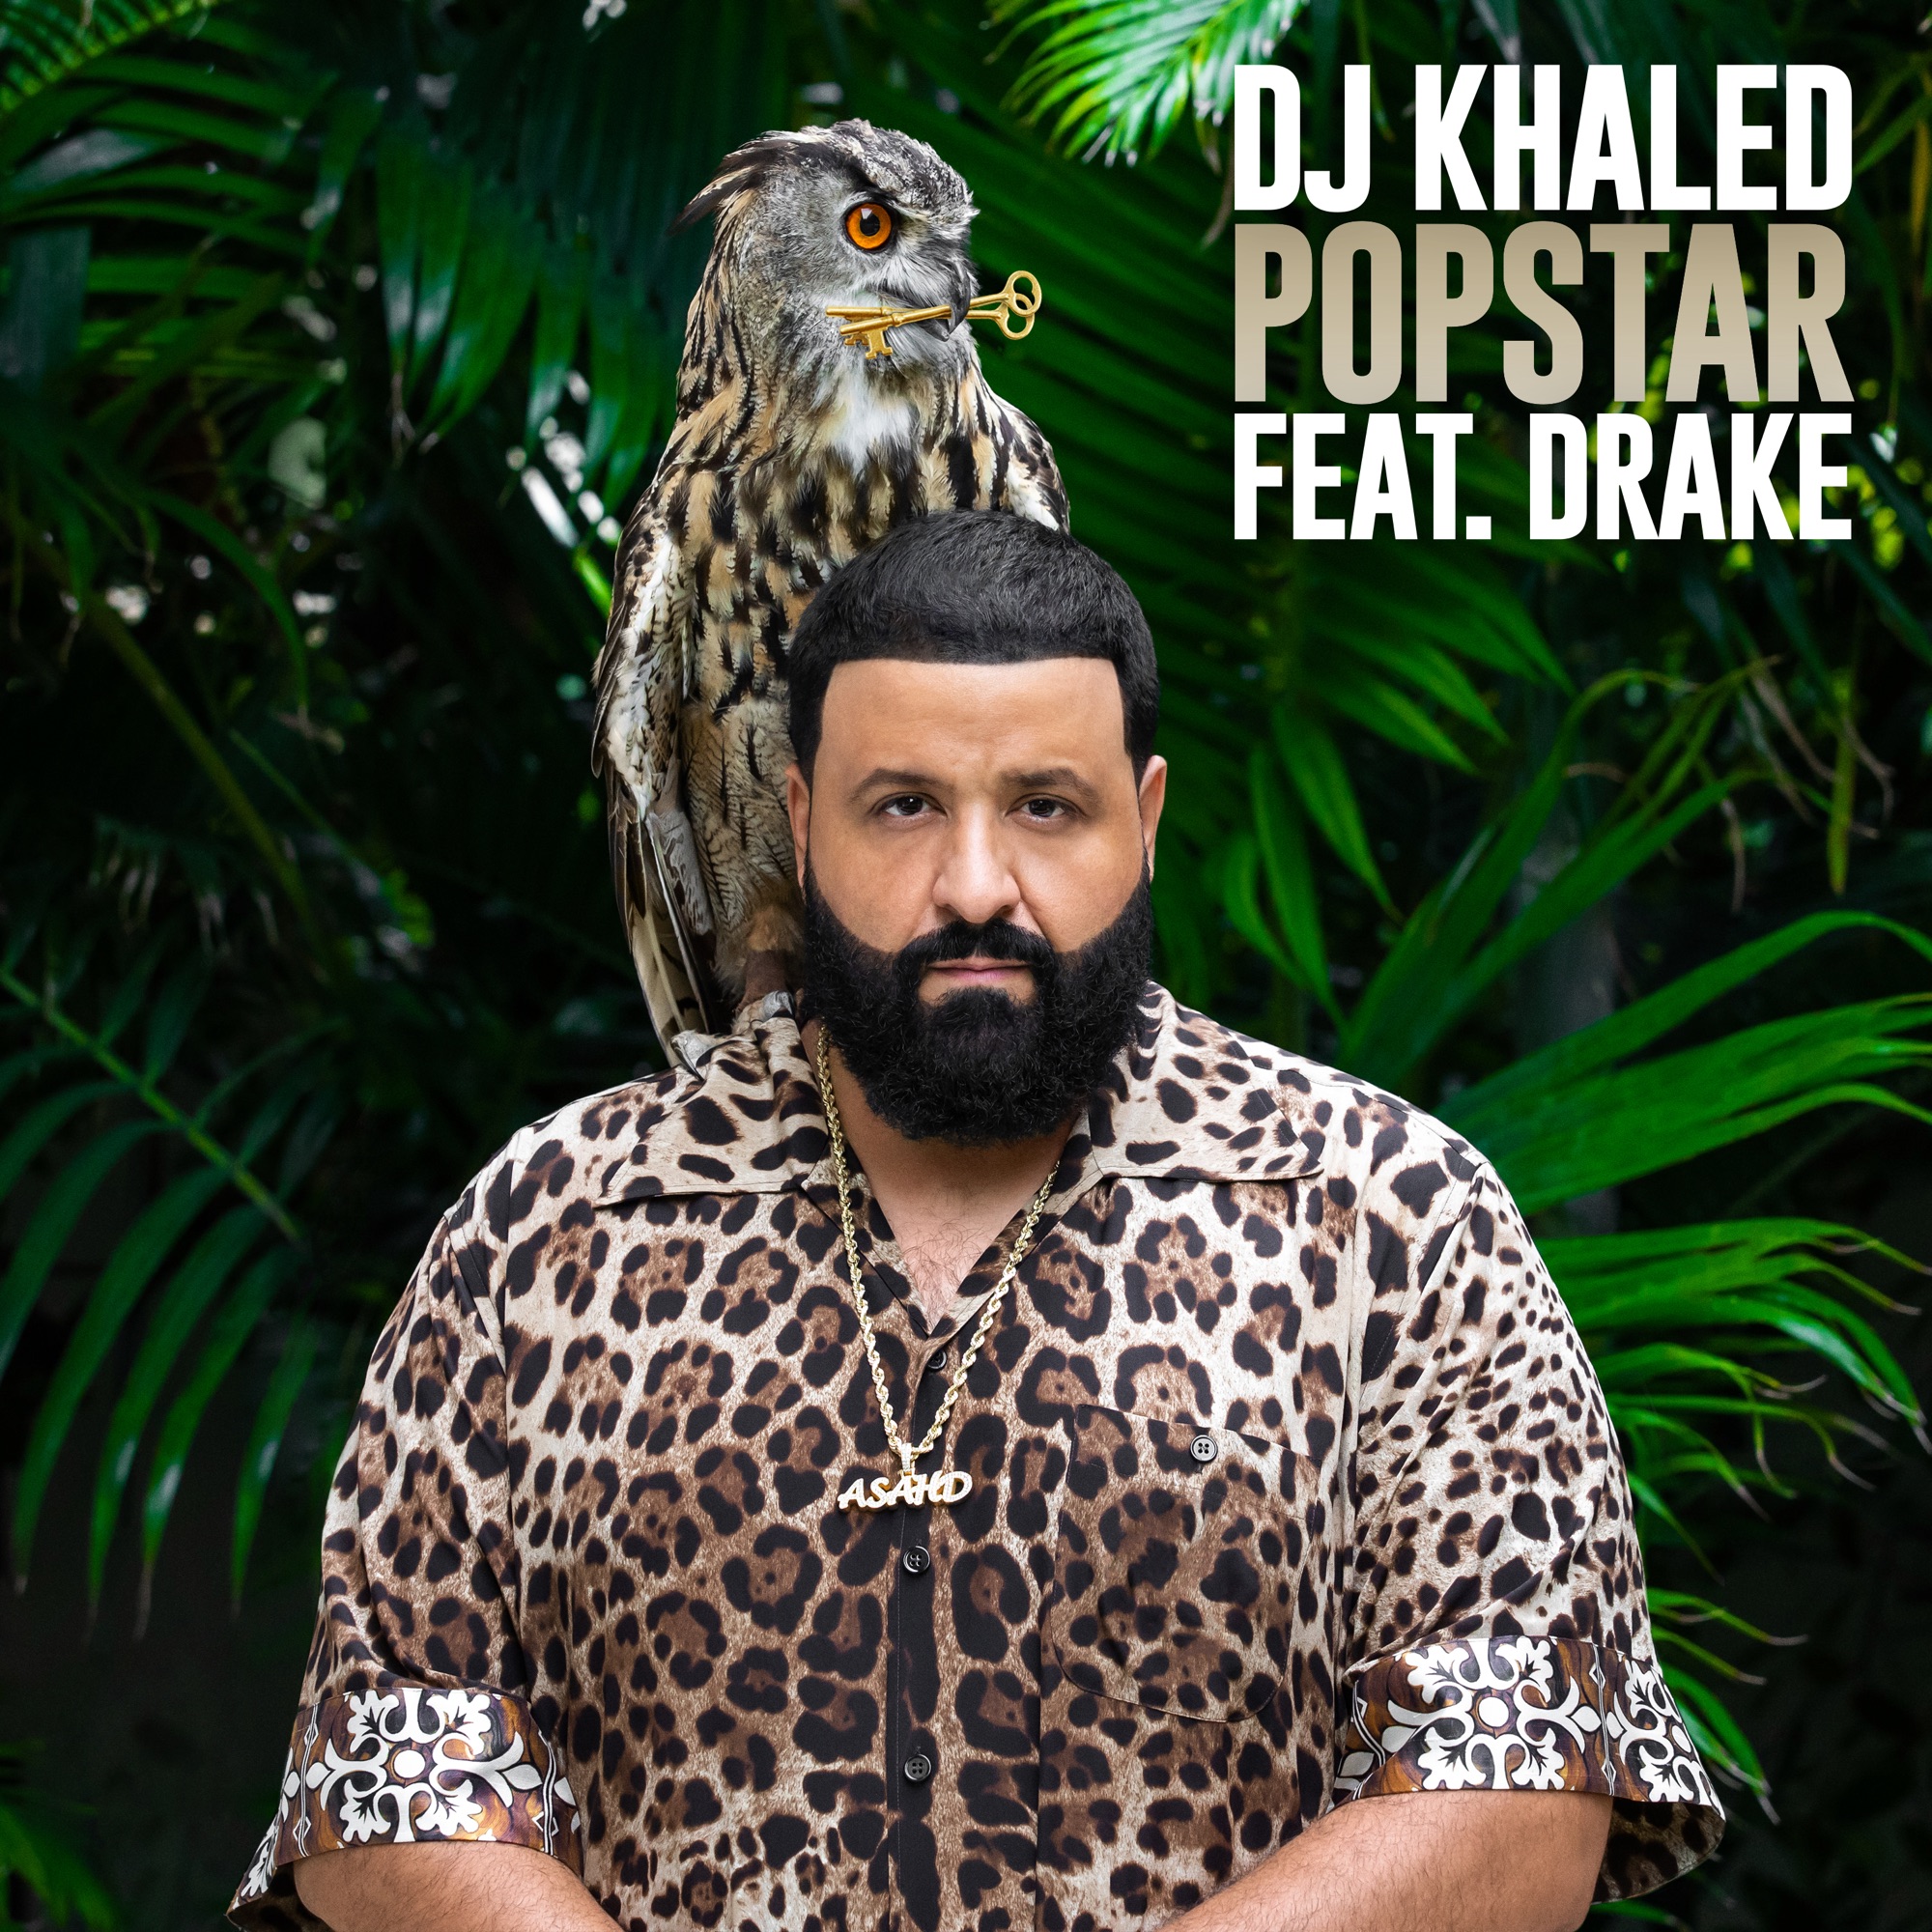 Art for POPSTAR (feat. Drake) by DJ Khaled